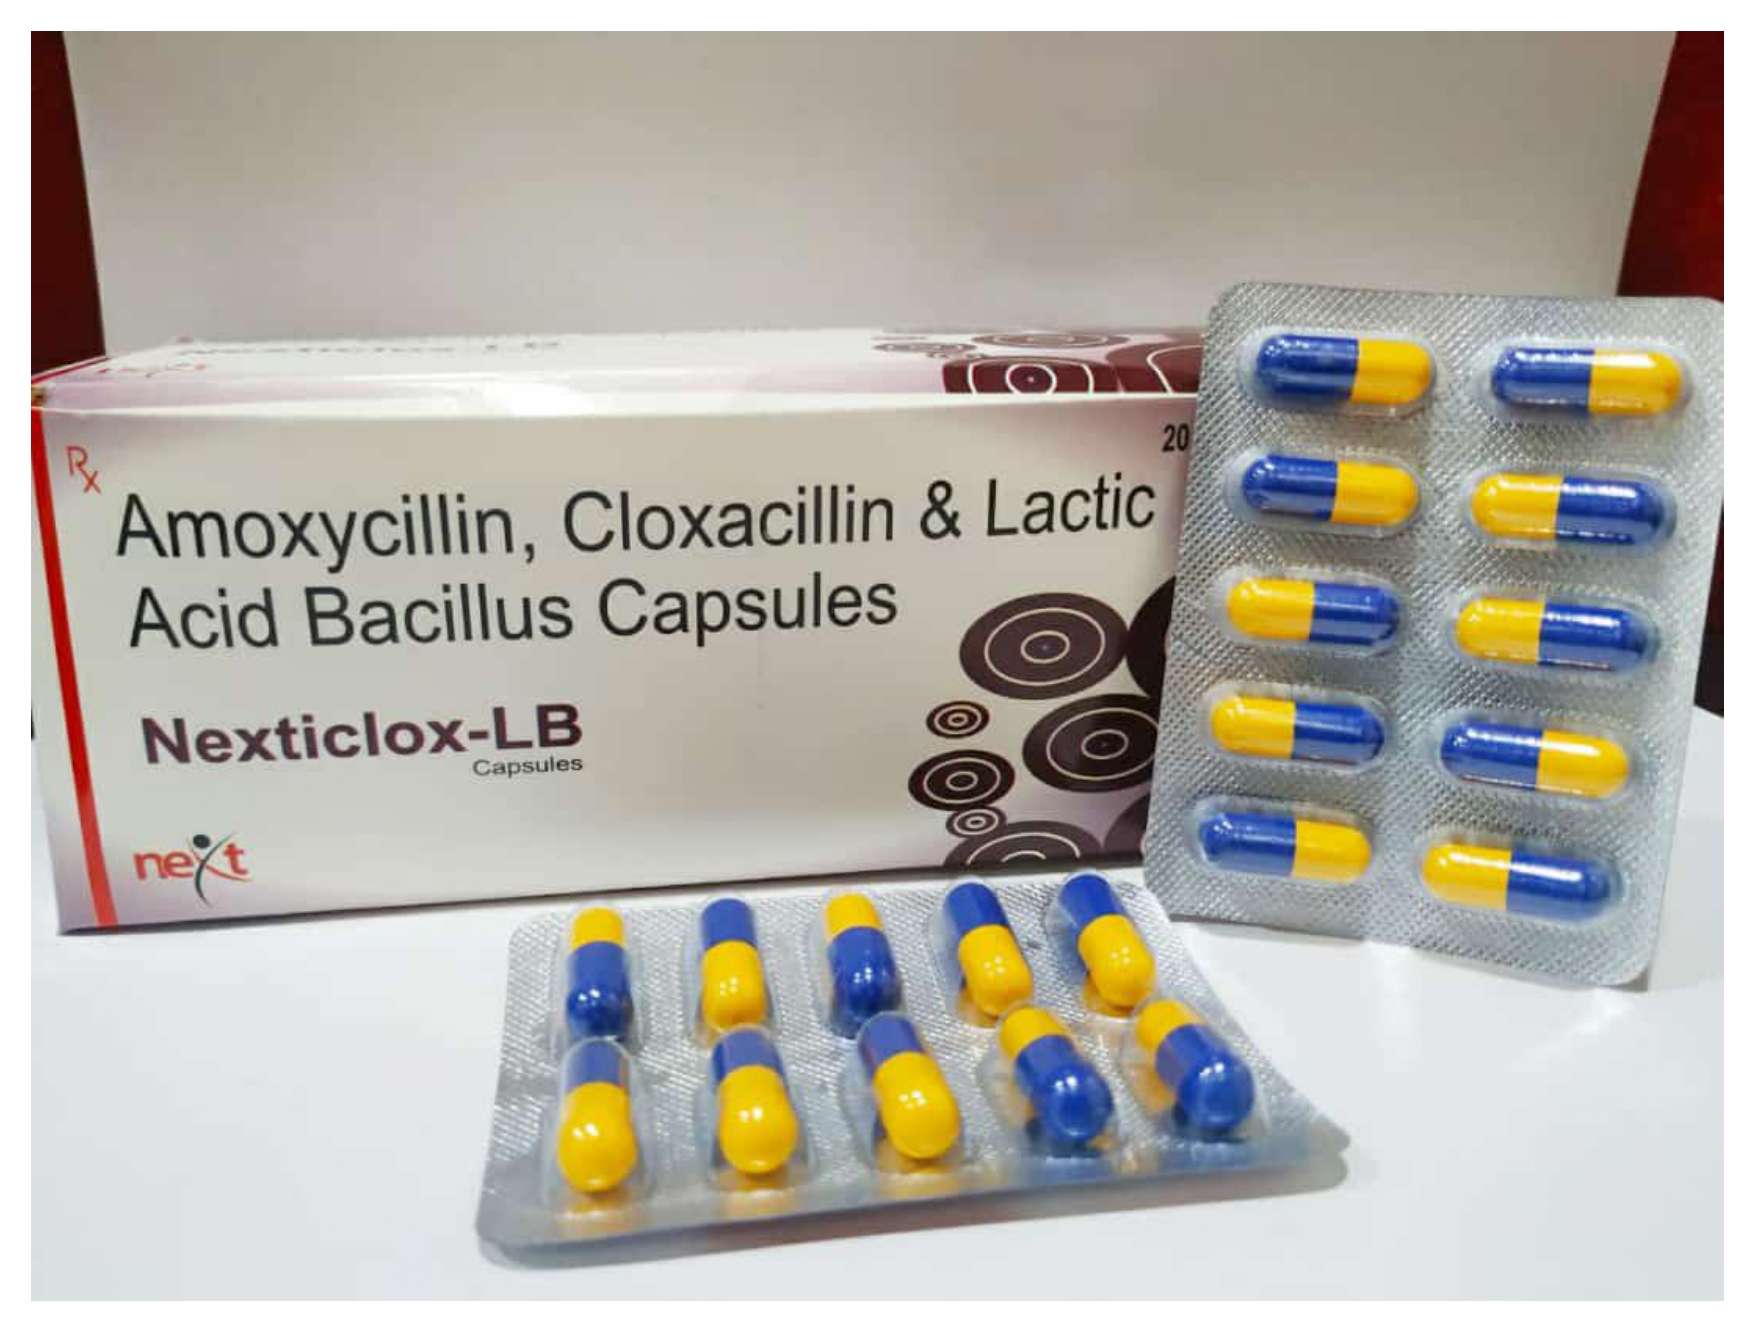 amoxycillin + cloxacillin + lactic acid bacillus capsules